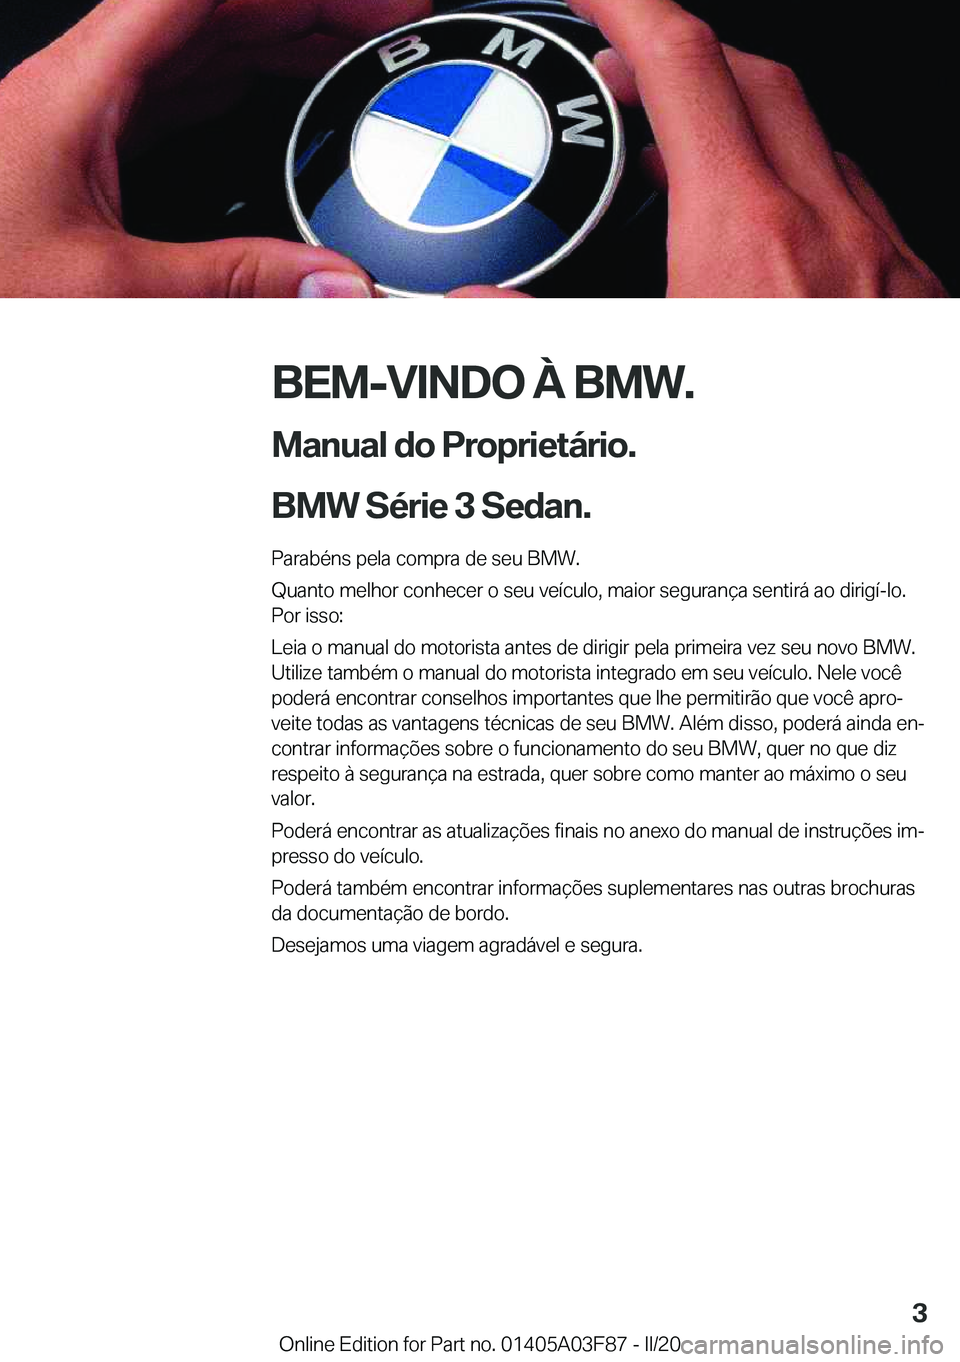 BMW 3 SERIES 2020  Manual do condutor (in Portuguese) �B�E�M�-�V�I�N�D�O��À��B�M�W�.
�M�a�n�u�a�l��d�o��P�r�o�p�r�i�e�t�á�r�i�o�.
�B�M�W��S�é�r�i�e��3��S�e�d�a�n�. �P�a�r�a�b�é�n�s��p�e�l�a��c�o�m�p�r�a��d�e��s�e�u��B�M�W�.�Q�u�a�n�t�o��